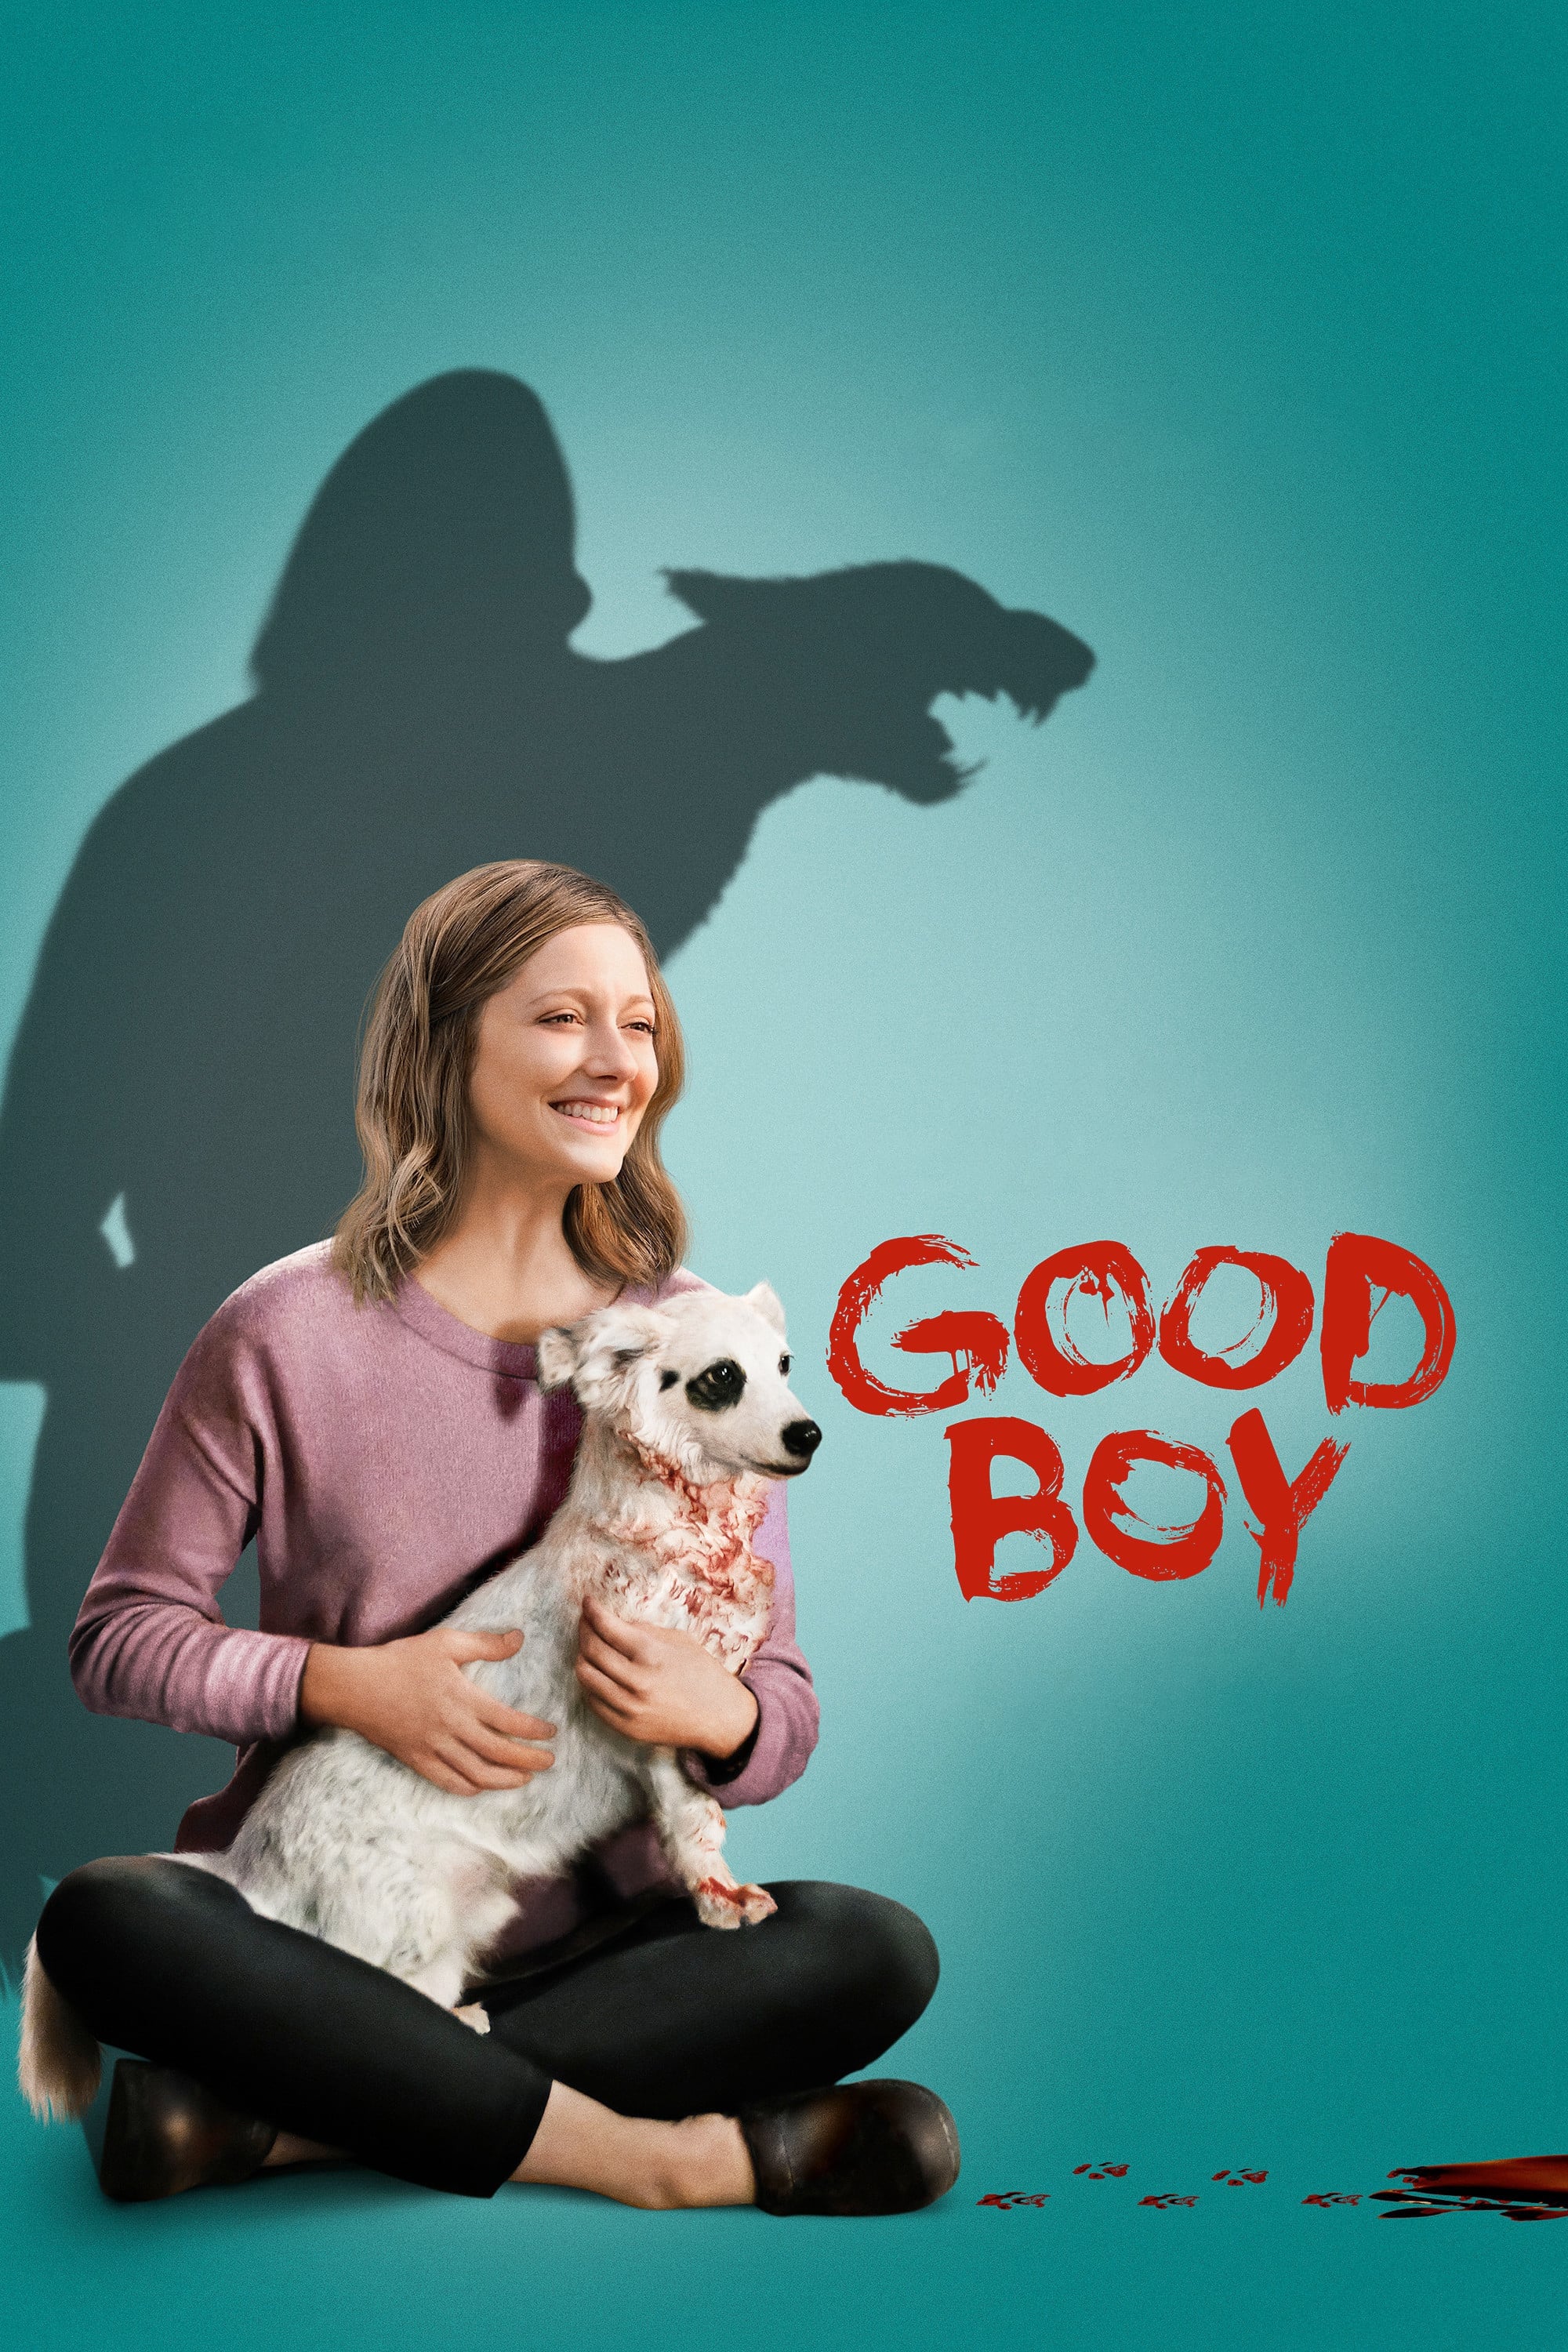 Good Boy 2020 Пълен филм BG аудио (SUB-BG) - lacostastream